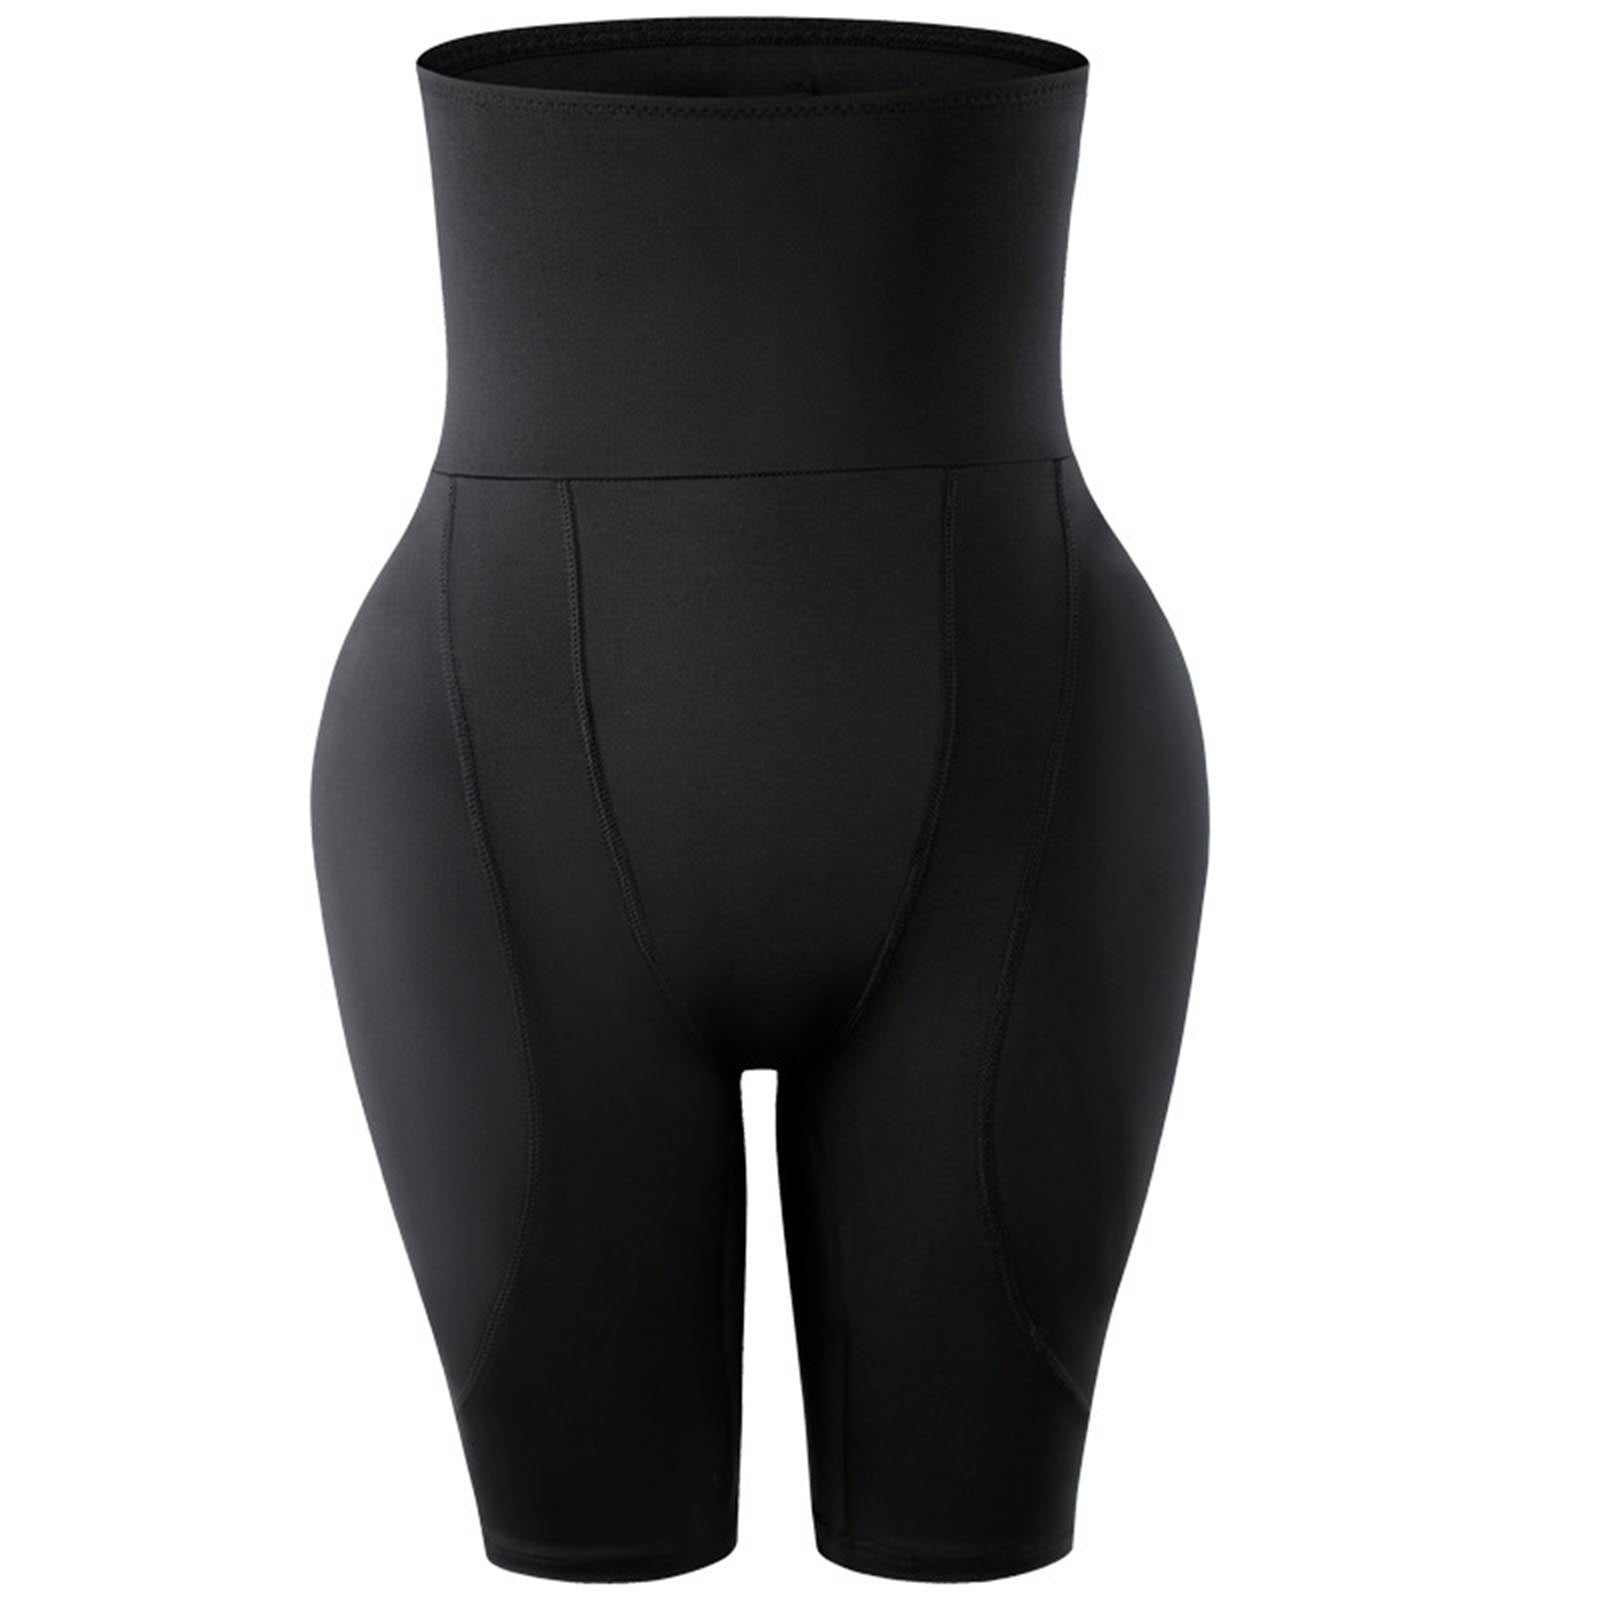 Youloveit Body Sculpting Shorts Female Butt Lift Waist Training Panties  Thighs Medium Suit Bodysui Tight Control Buttock